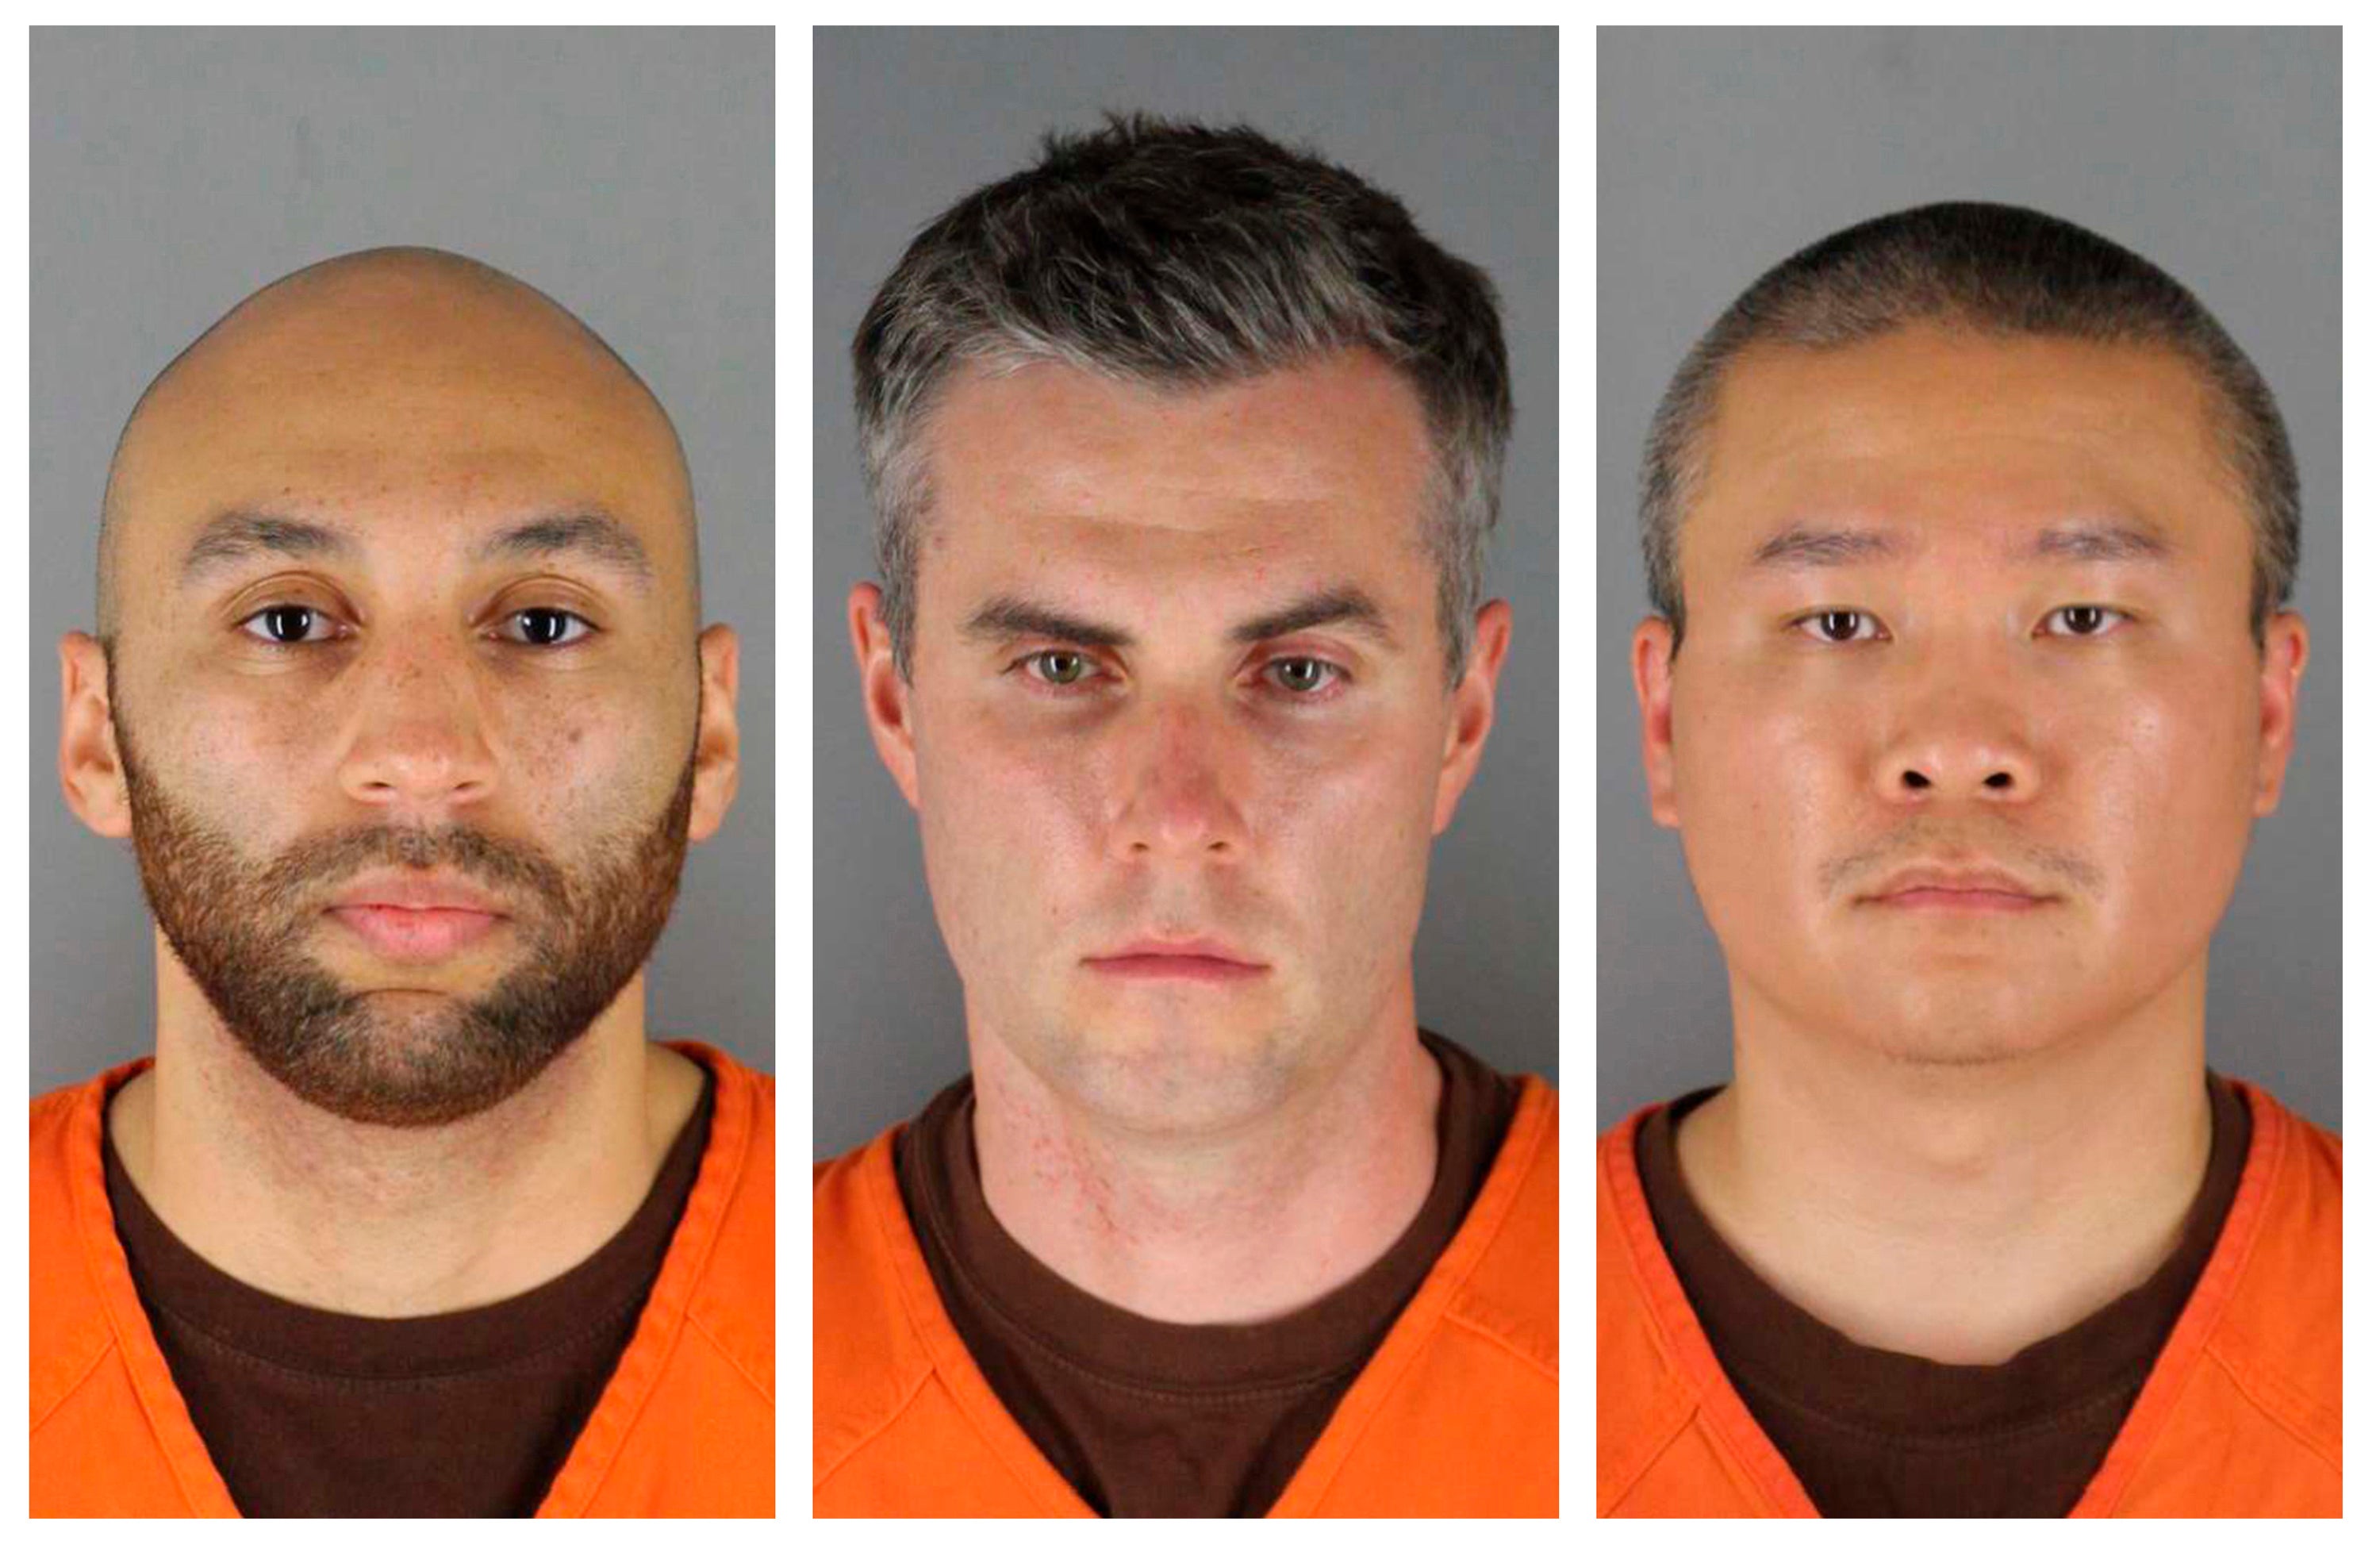 J. Alexander Kueng, Thomas Lane y Tou Thao de izquierda a derecha en fotos de detención